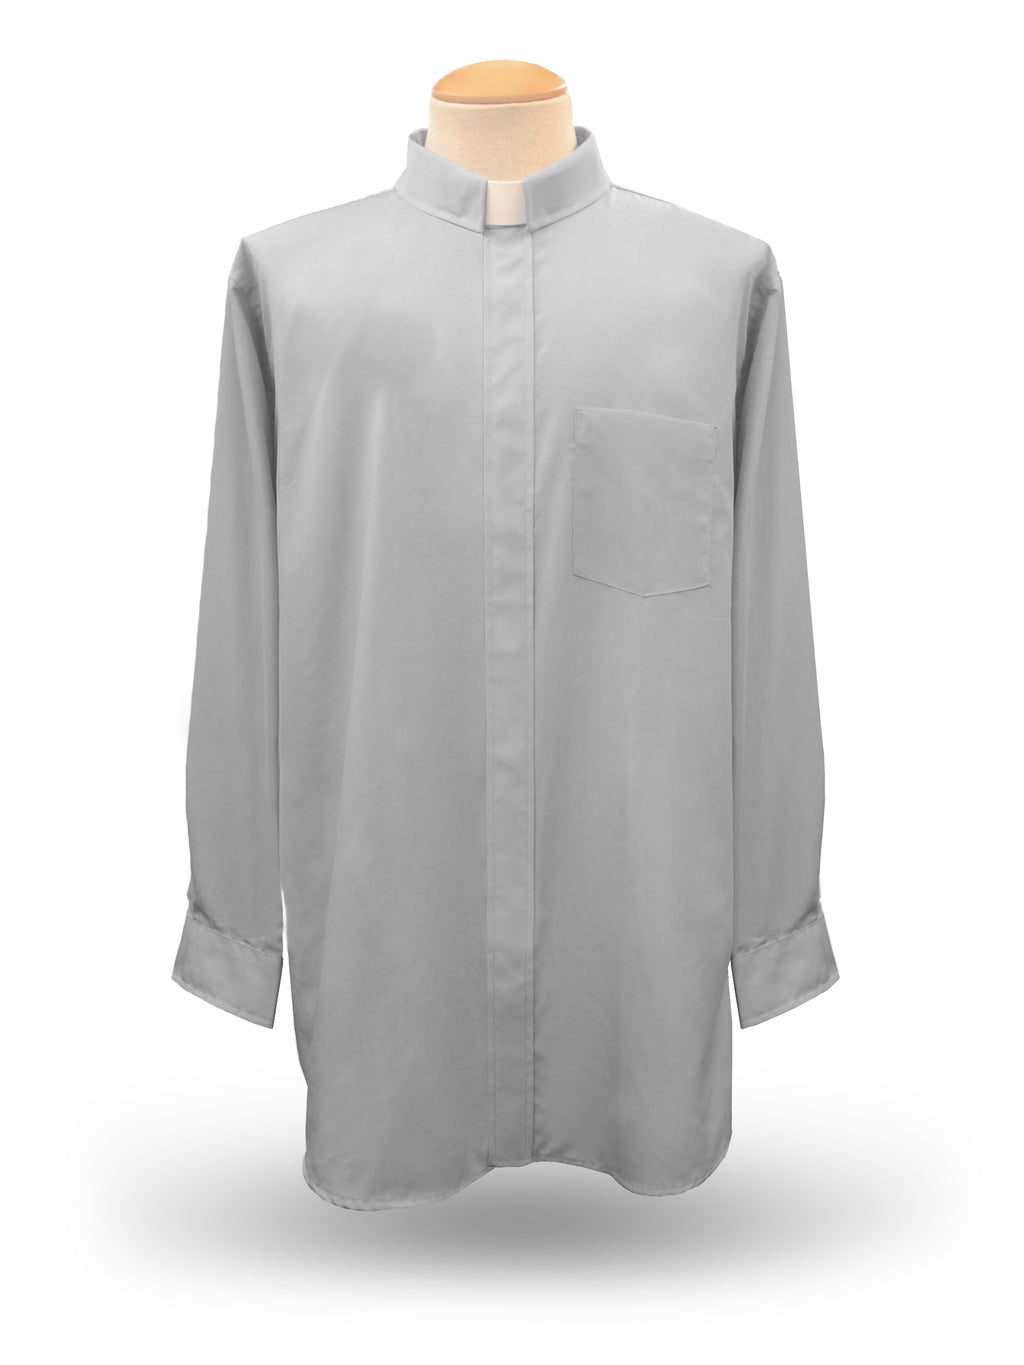 Men's Long Sleeve <br> Tab Collar Clergy Shirt <br> in Grey